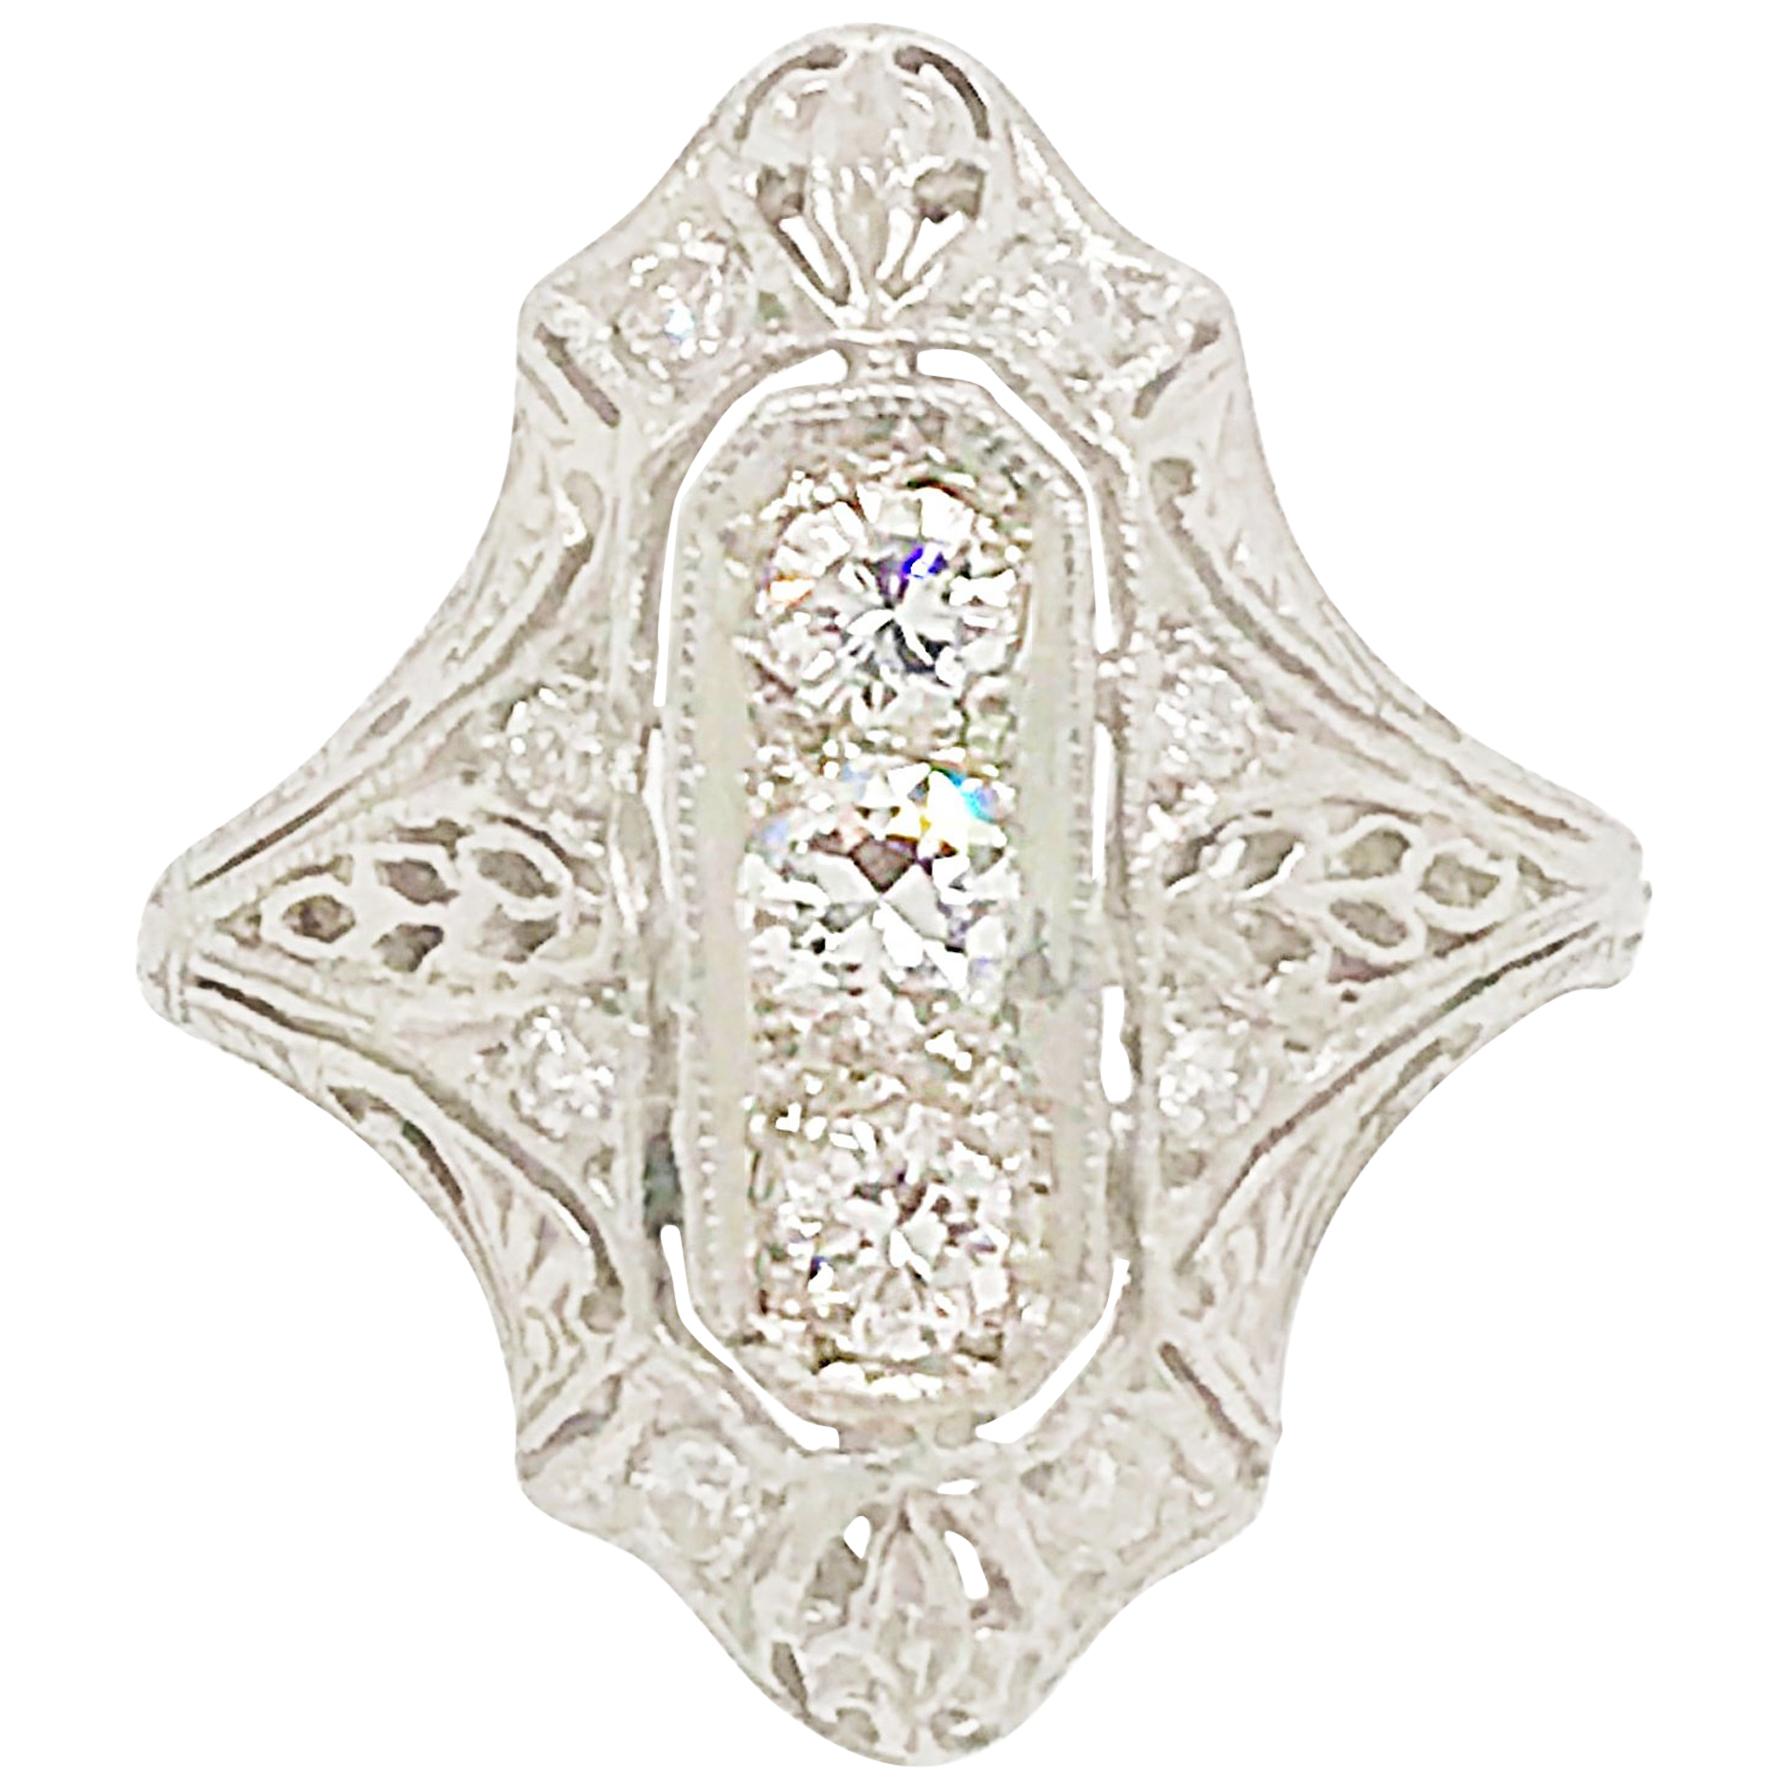 Platinum Antique Style Diamond Ring with Pierced Filigree Detailing